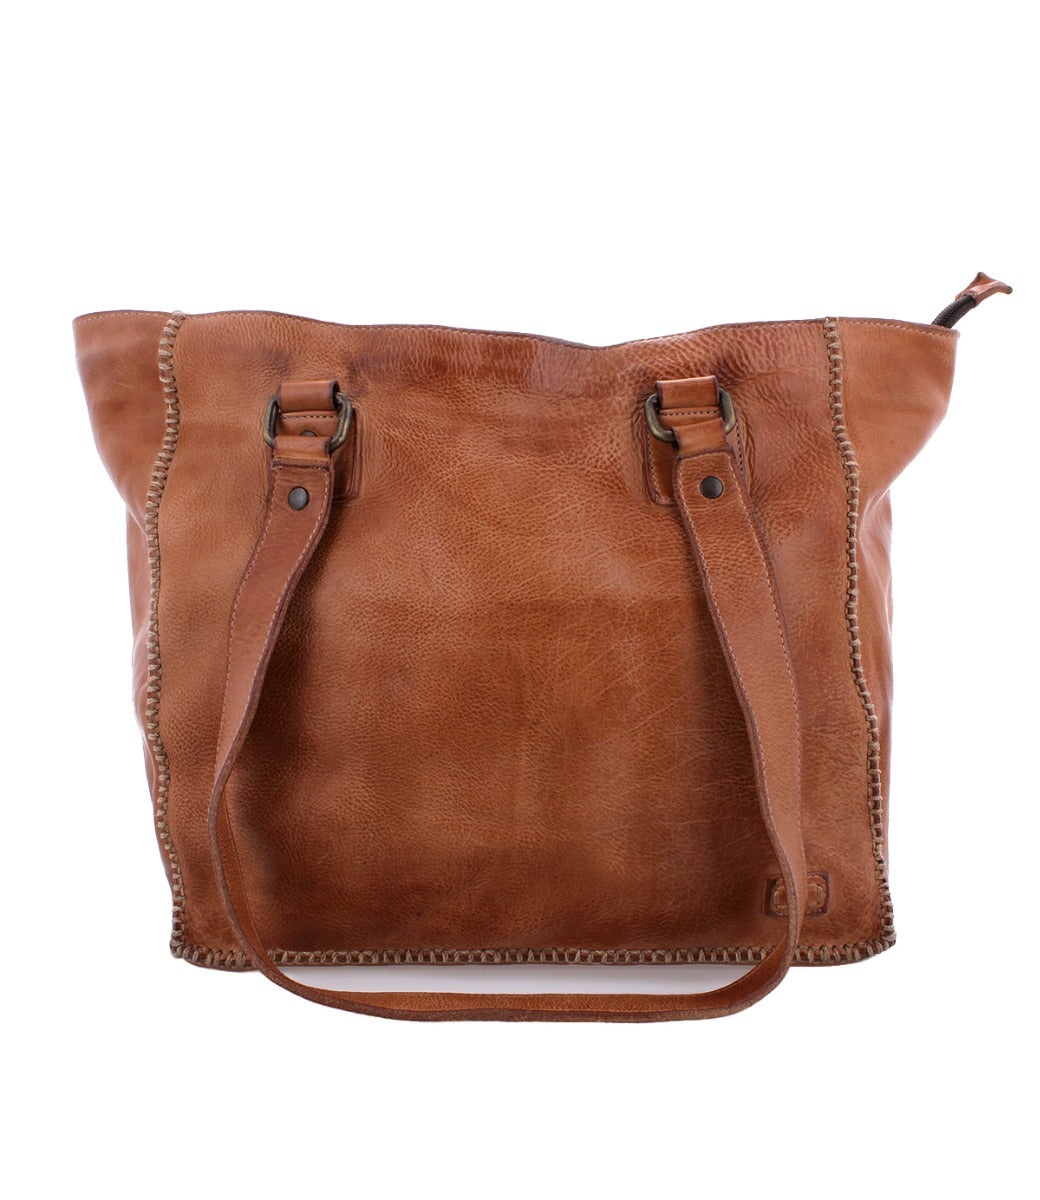 The Bed Stu Celindra LTC tan leather tote bag.